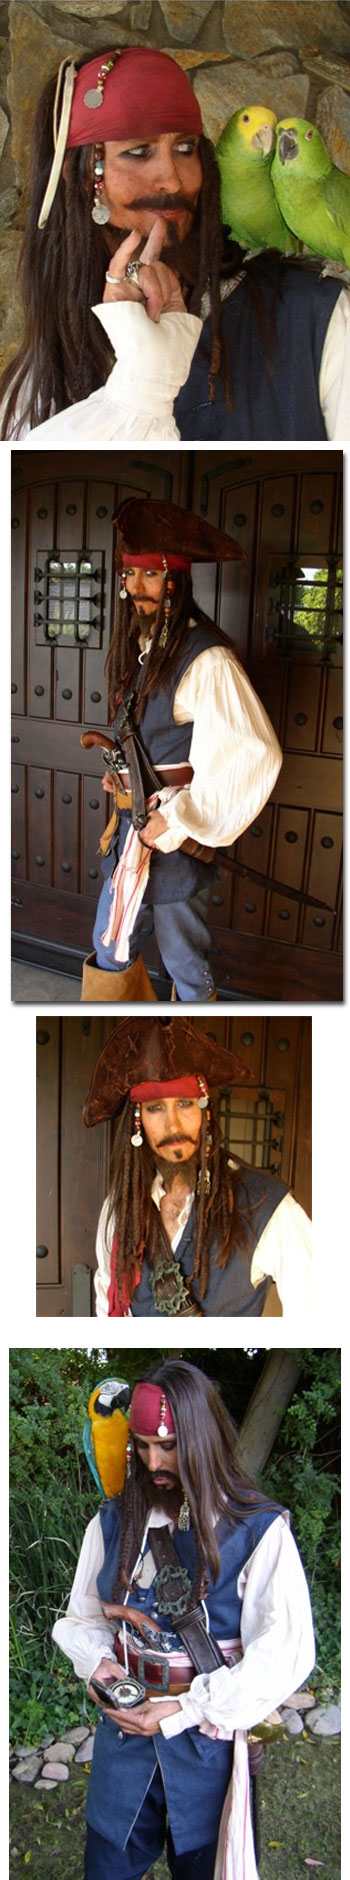 Captain Jack Sparrow - Johnny Depp Look Alike